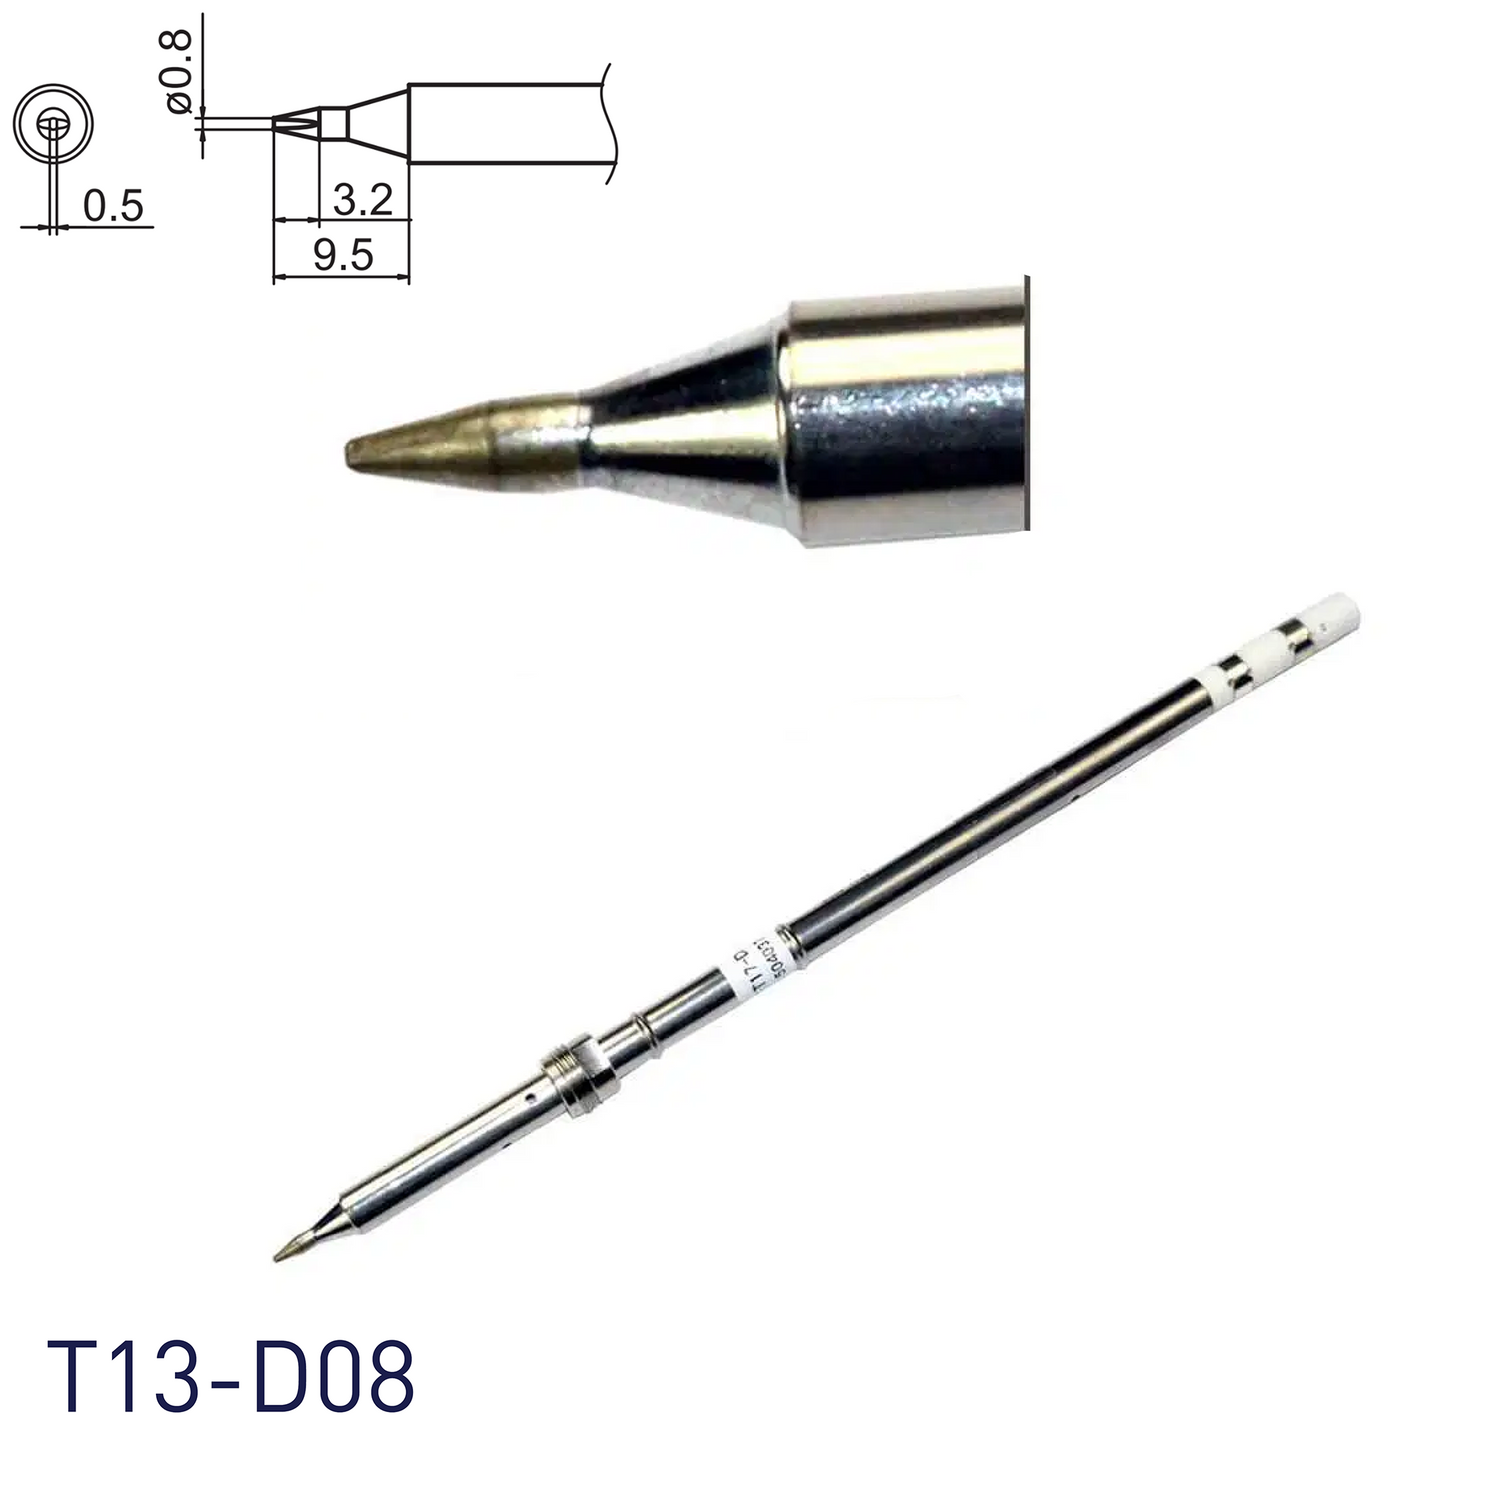 Hakko Soldering Iron Replacement Tip T13 - for FM2026 N2 soldering iron in flat-head screwdriver shape